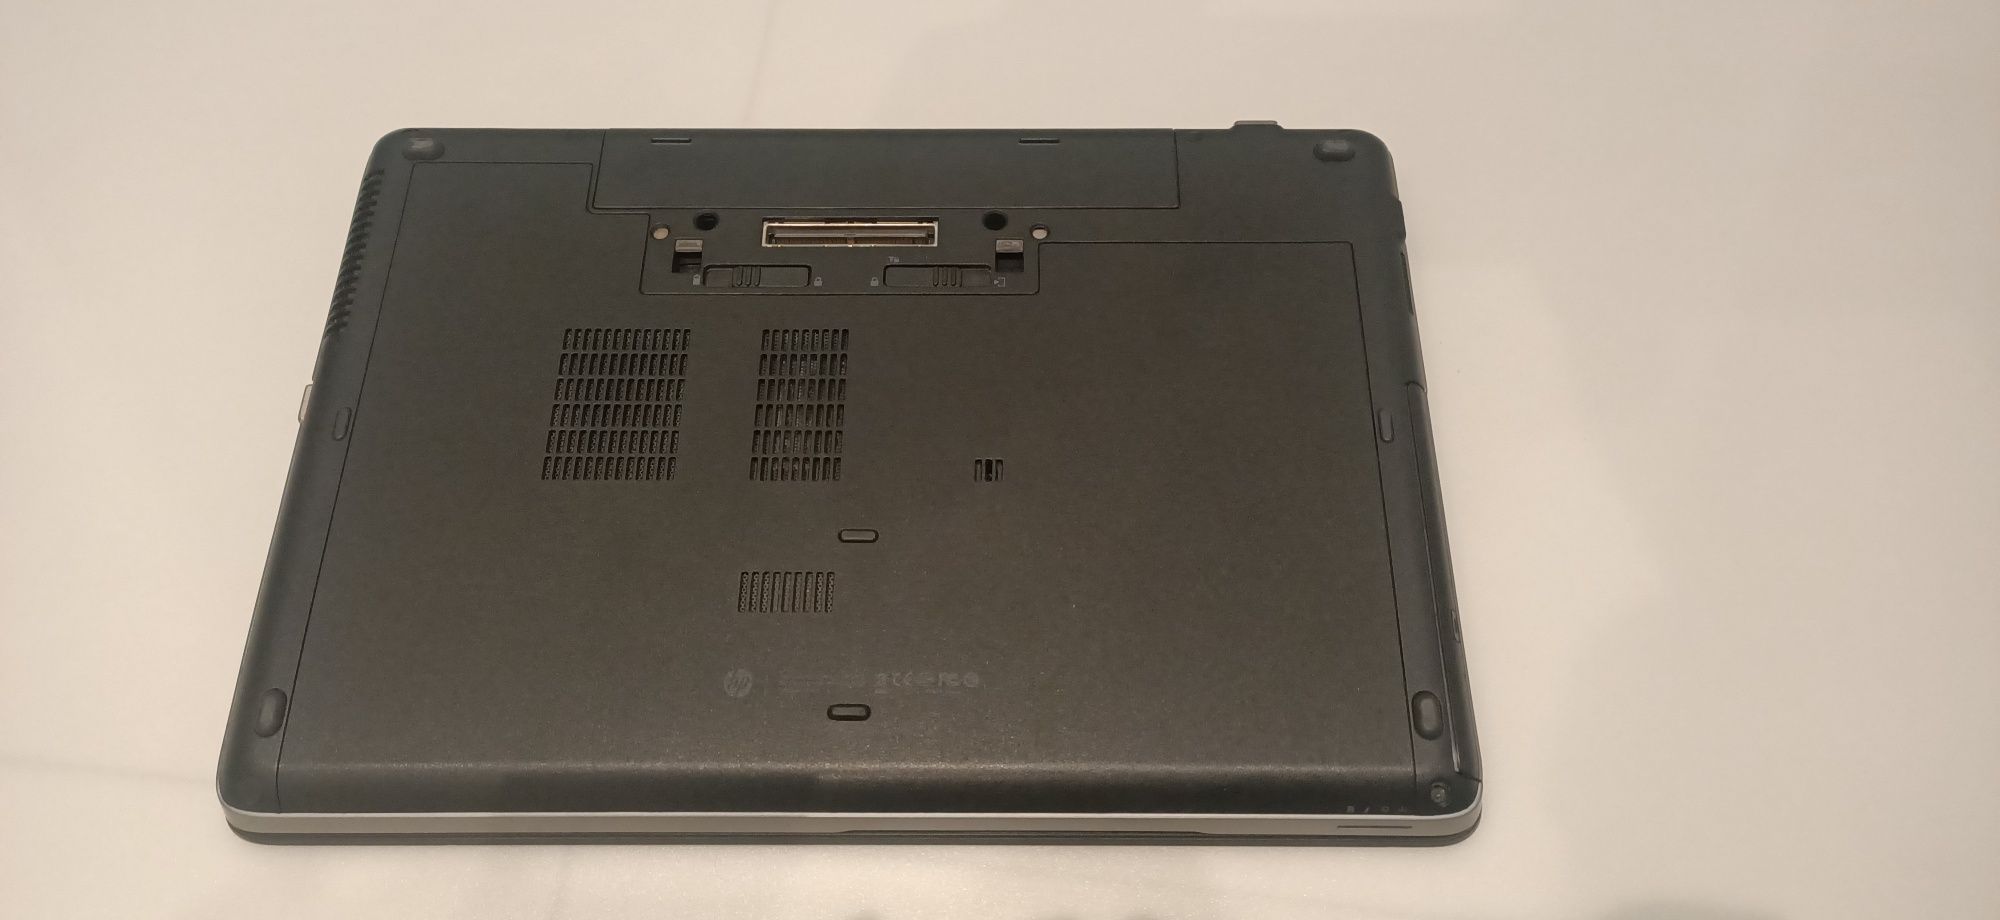 HP ProBook 650 G1 i5-4210M 8GB RAM 500GB HDD